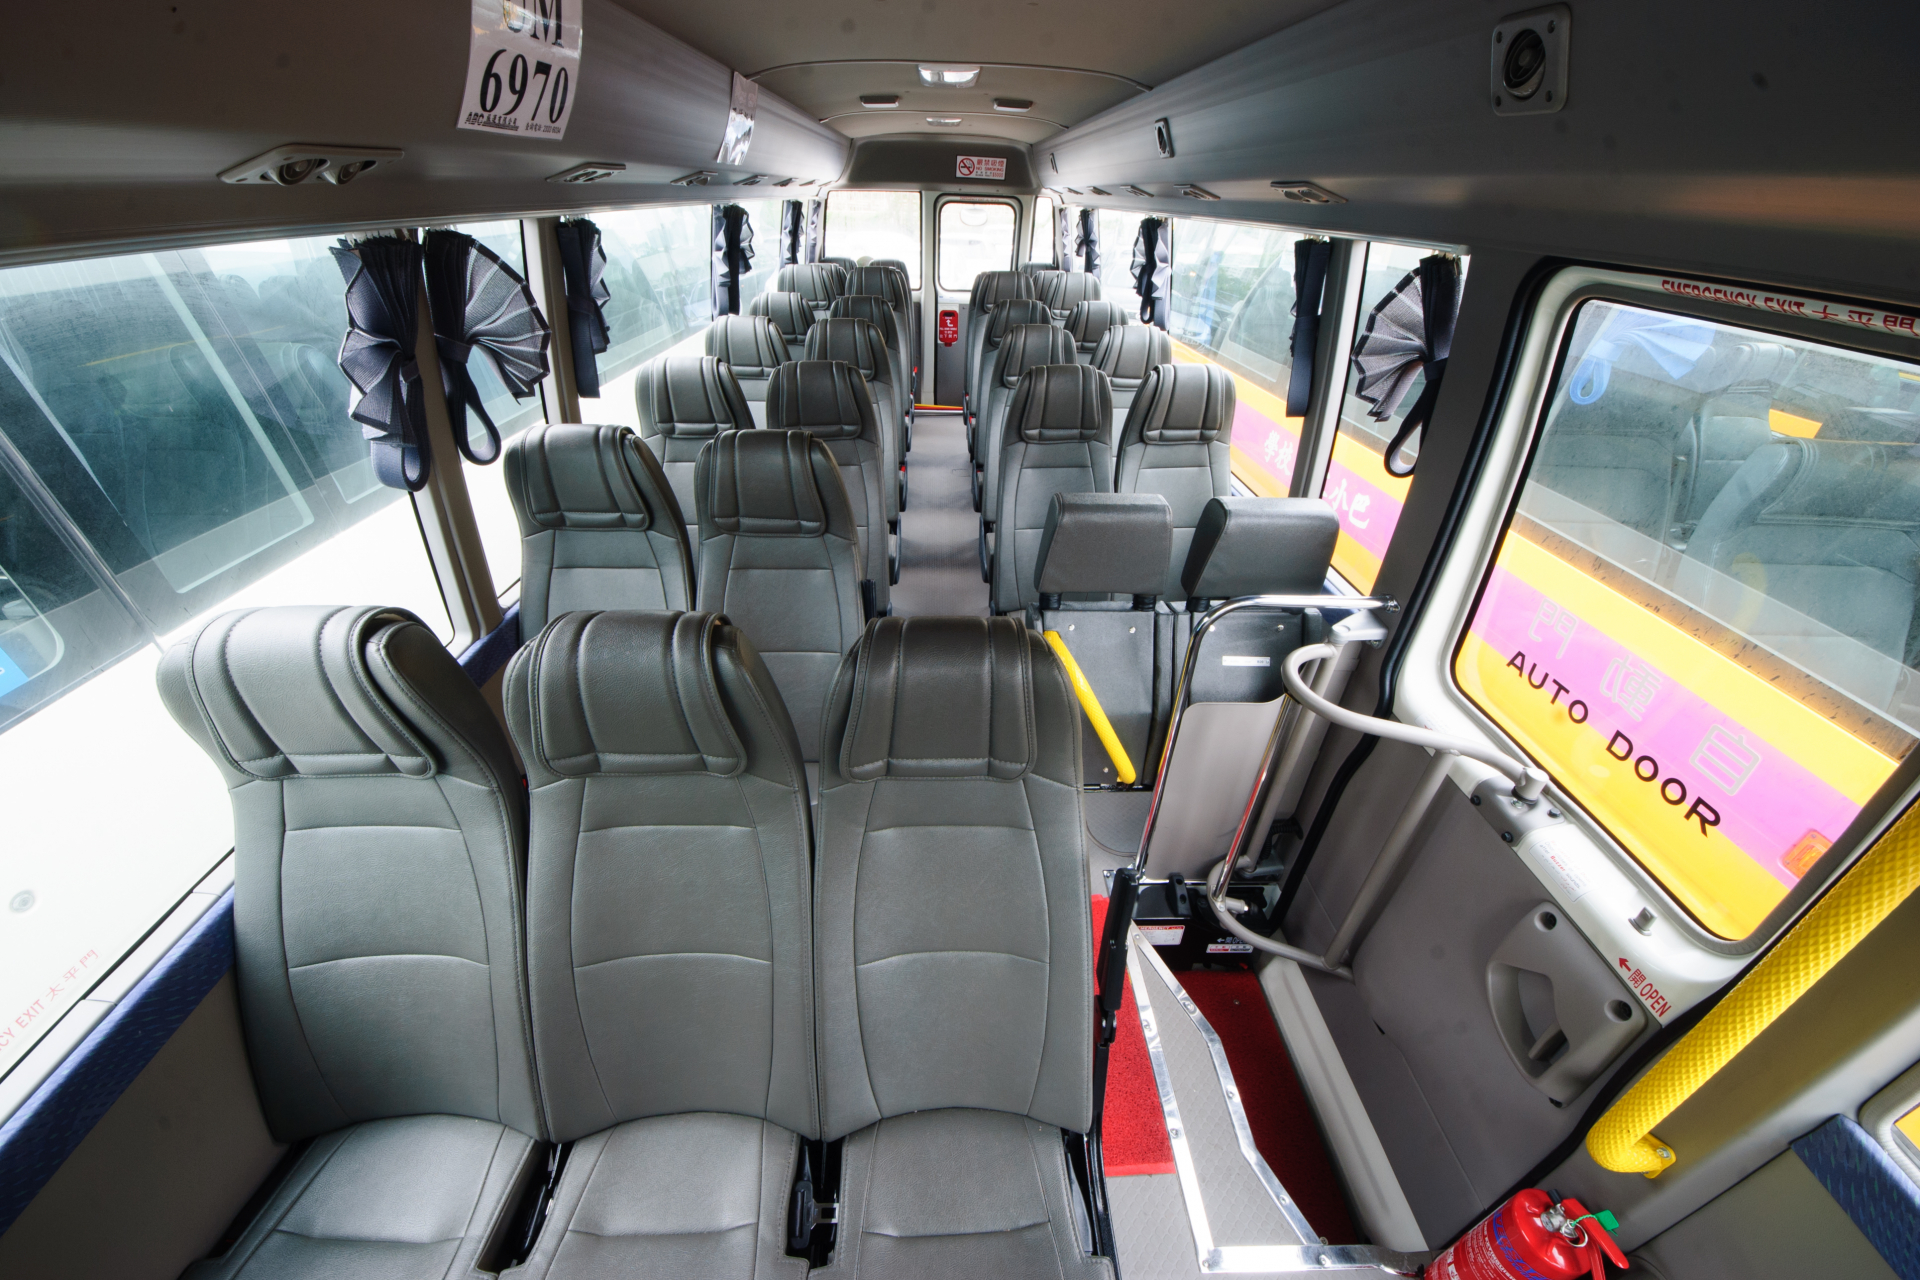 28 Seats TOYOTA - LG8325, UT3031
Coach Bus /
Hong Kong Island, Hong Kong

 / Hourly (Wedding) HKD 470.00
 / Hourly HKD 470.00
